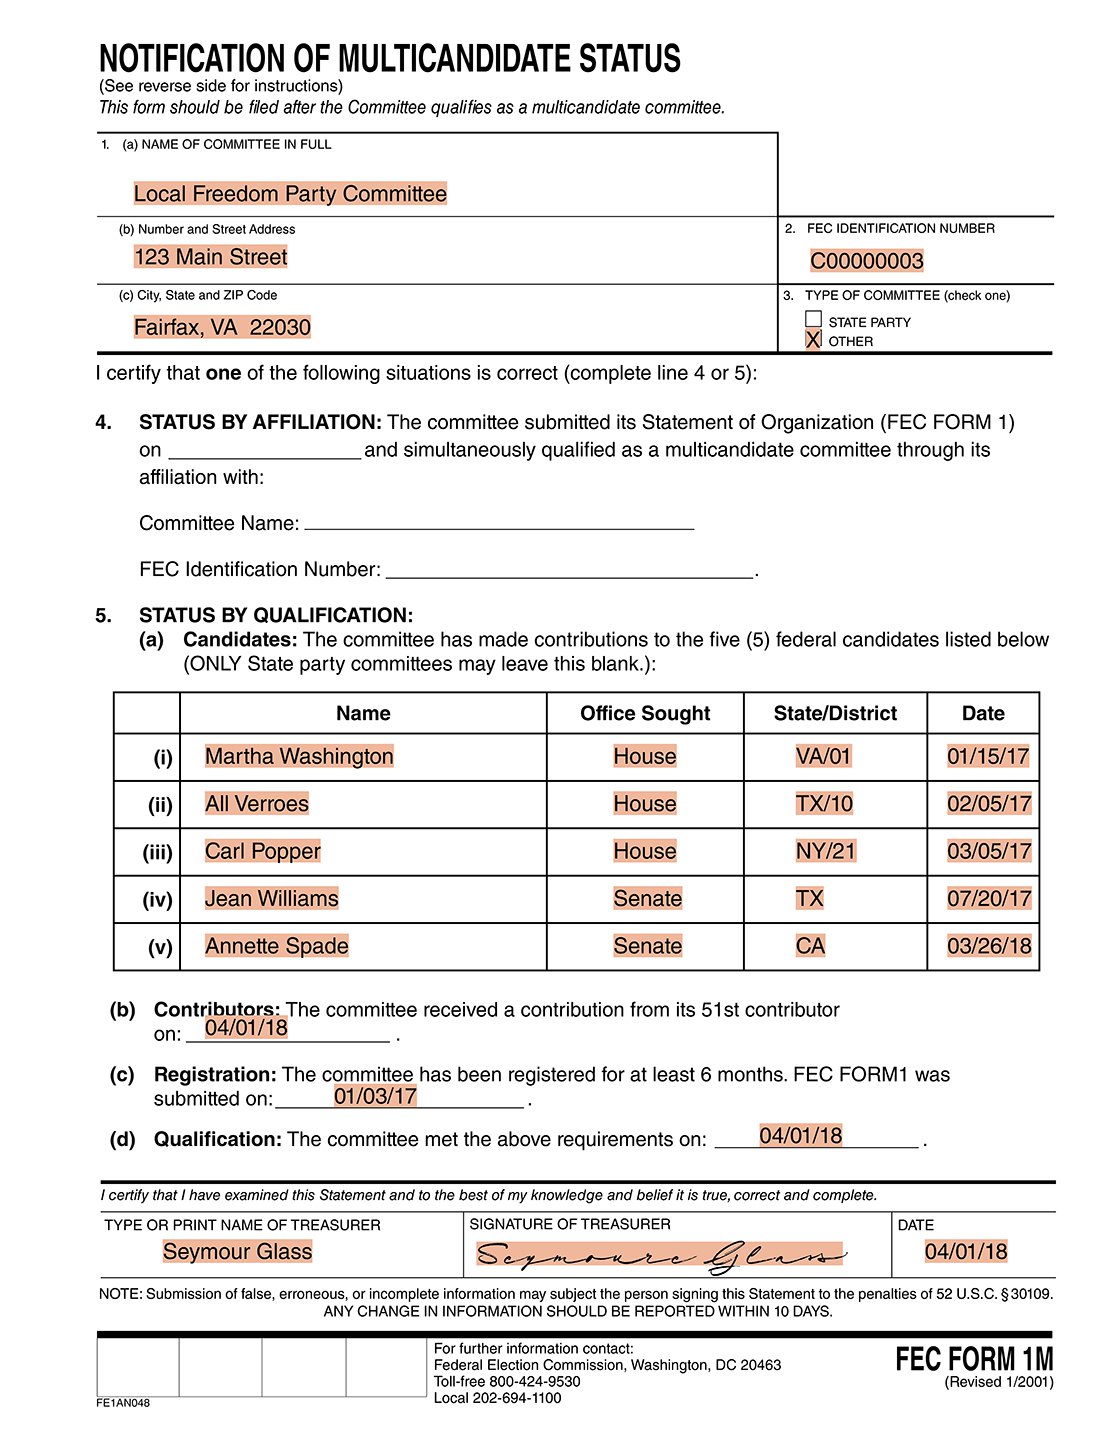 Image of FEC Form 1M - Notification of Multicandidate Status